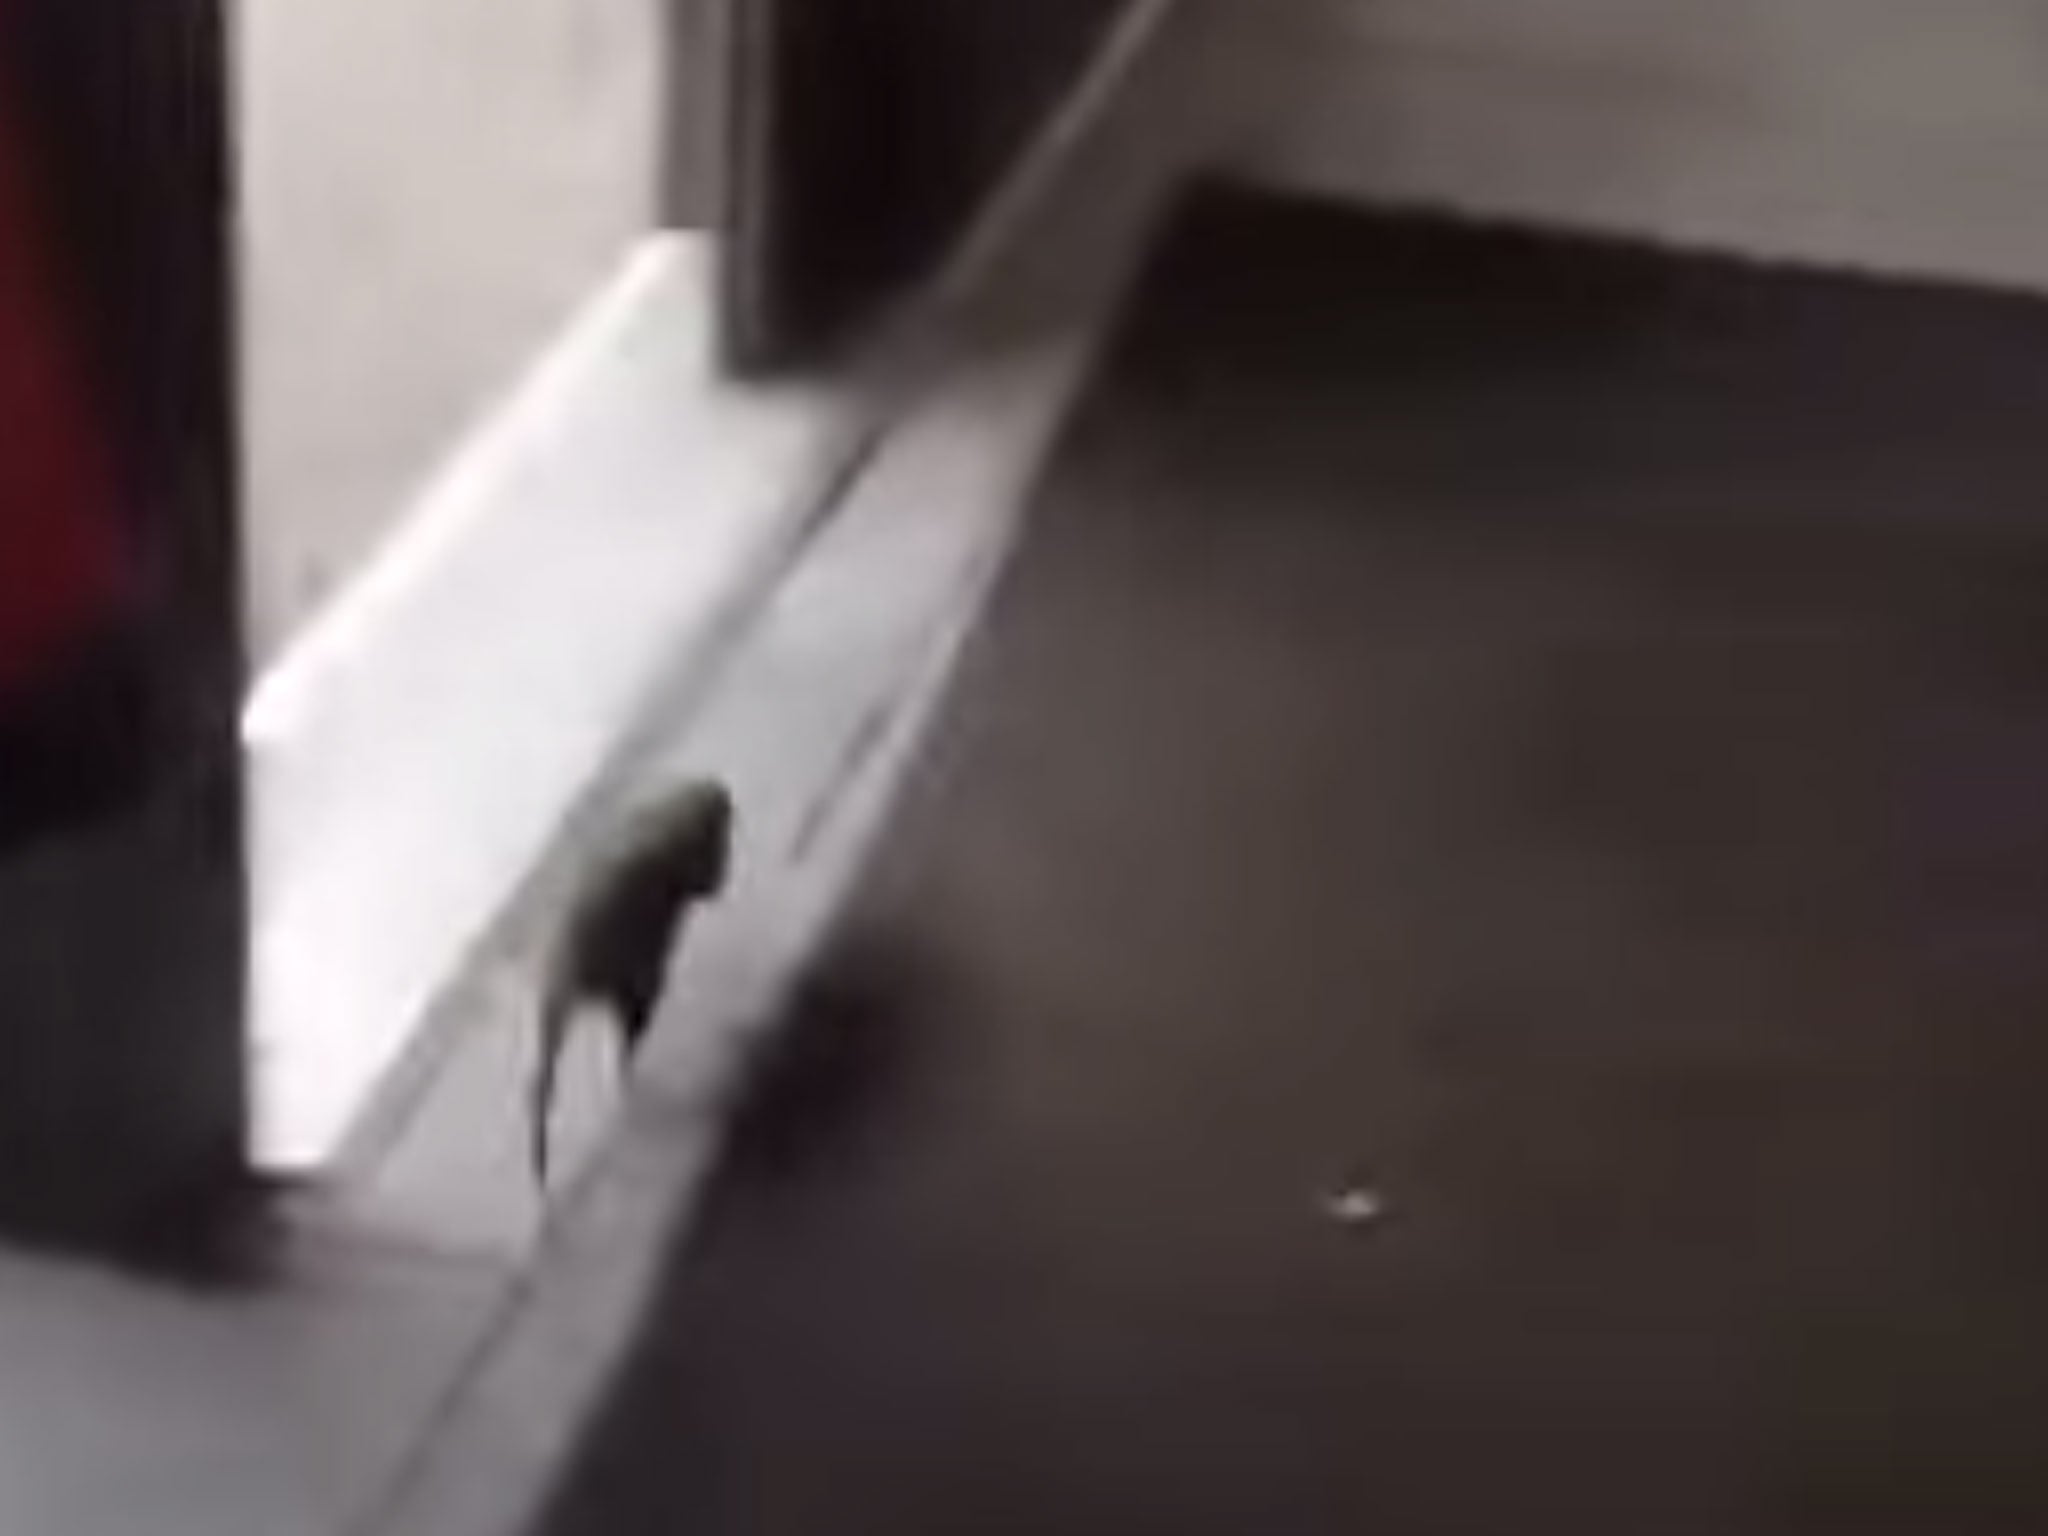 The rat sprinted across the McDonald's